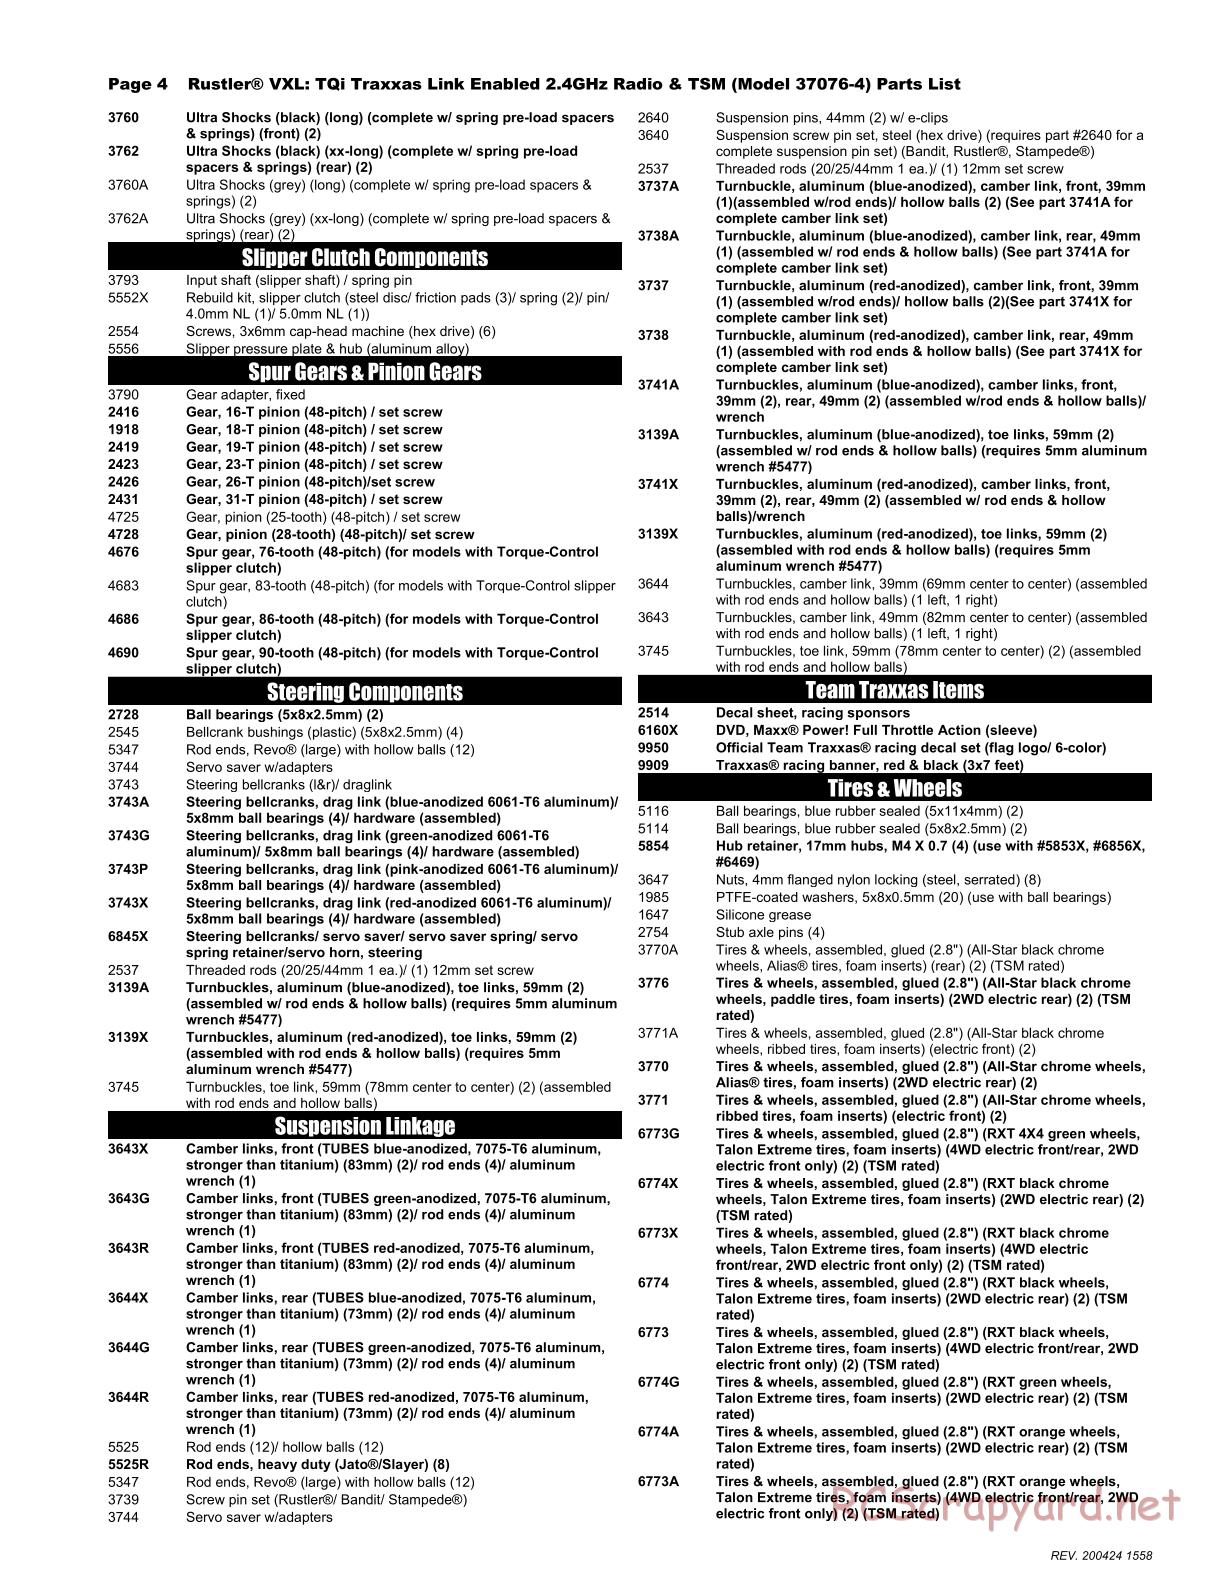 Traxxas - Rustler VXL TSM - Parts List - Page 4